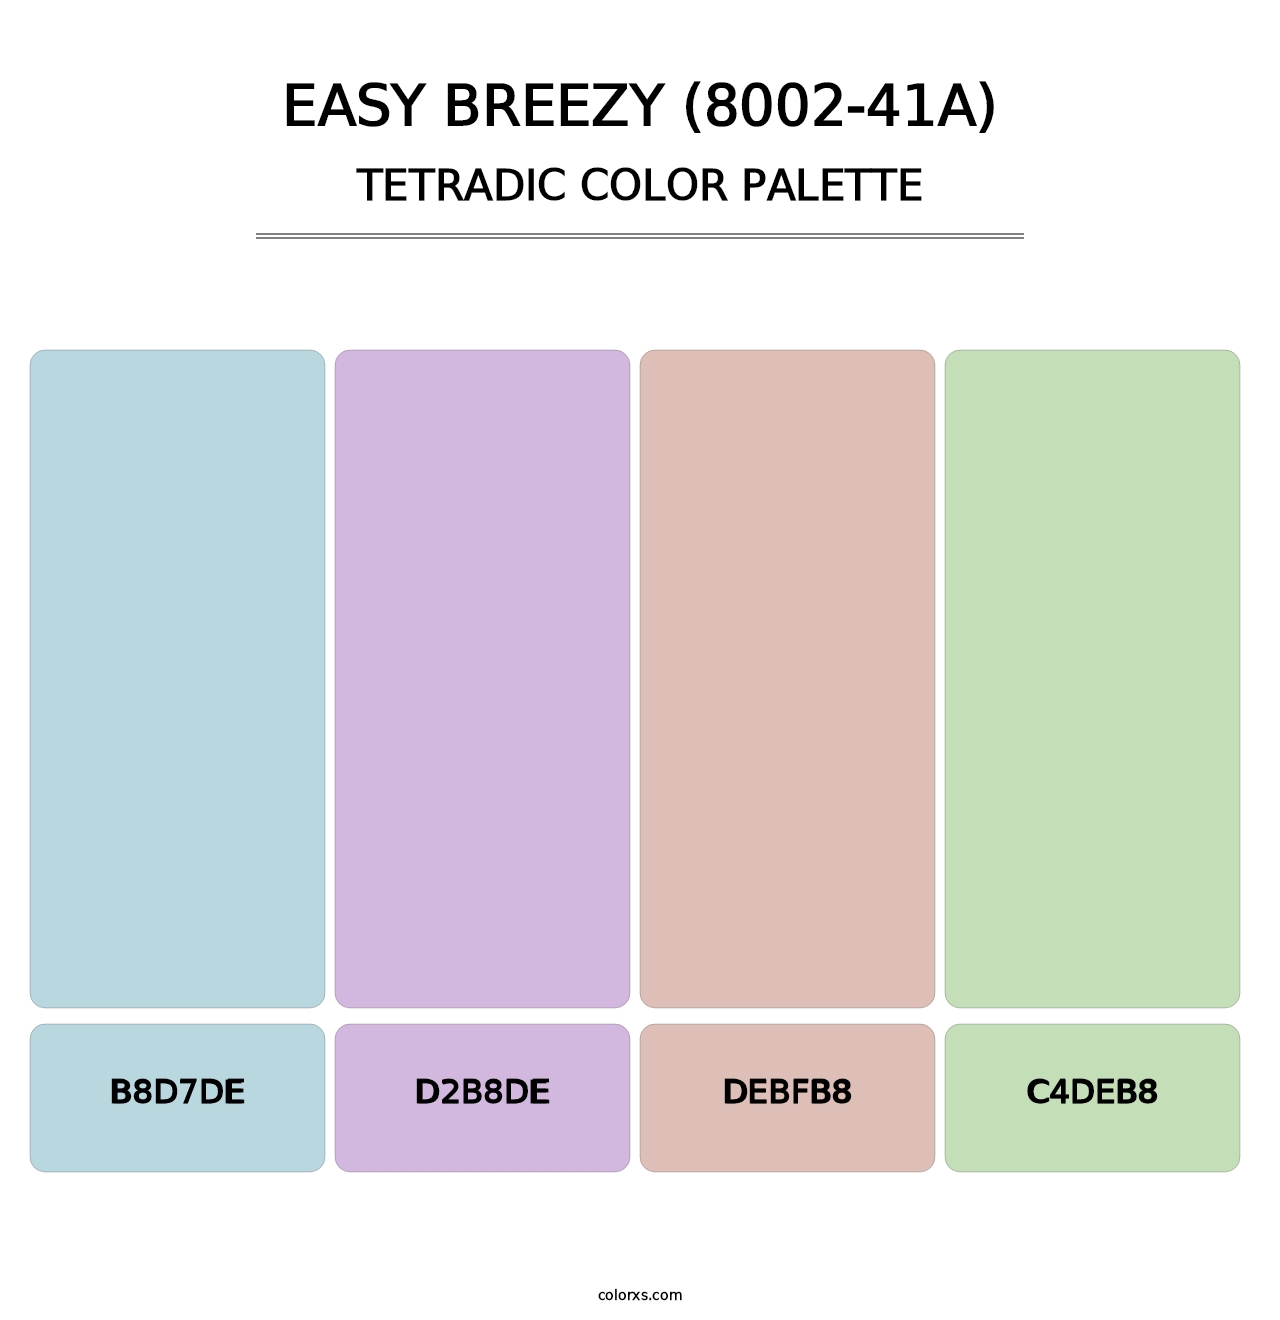 Easy Breezy (8002-41A) - Tetradic Color Palette